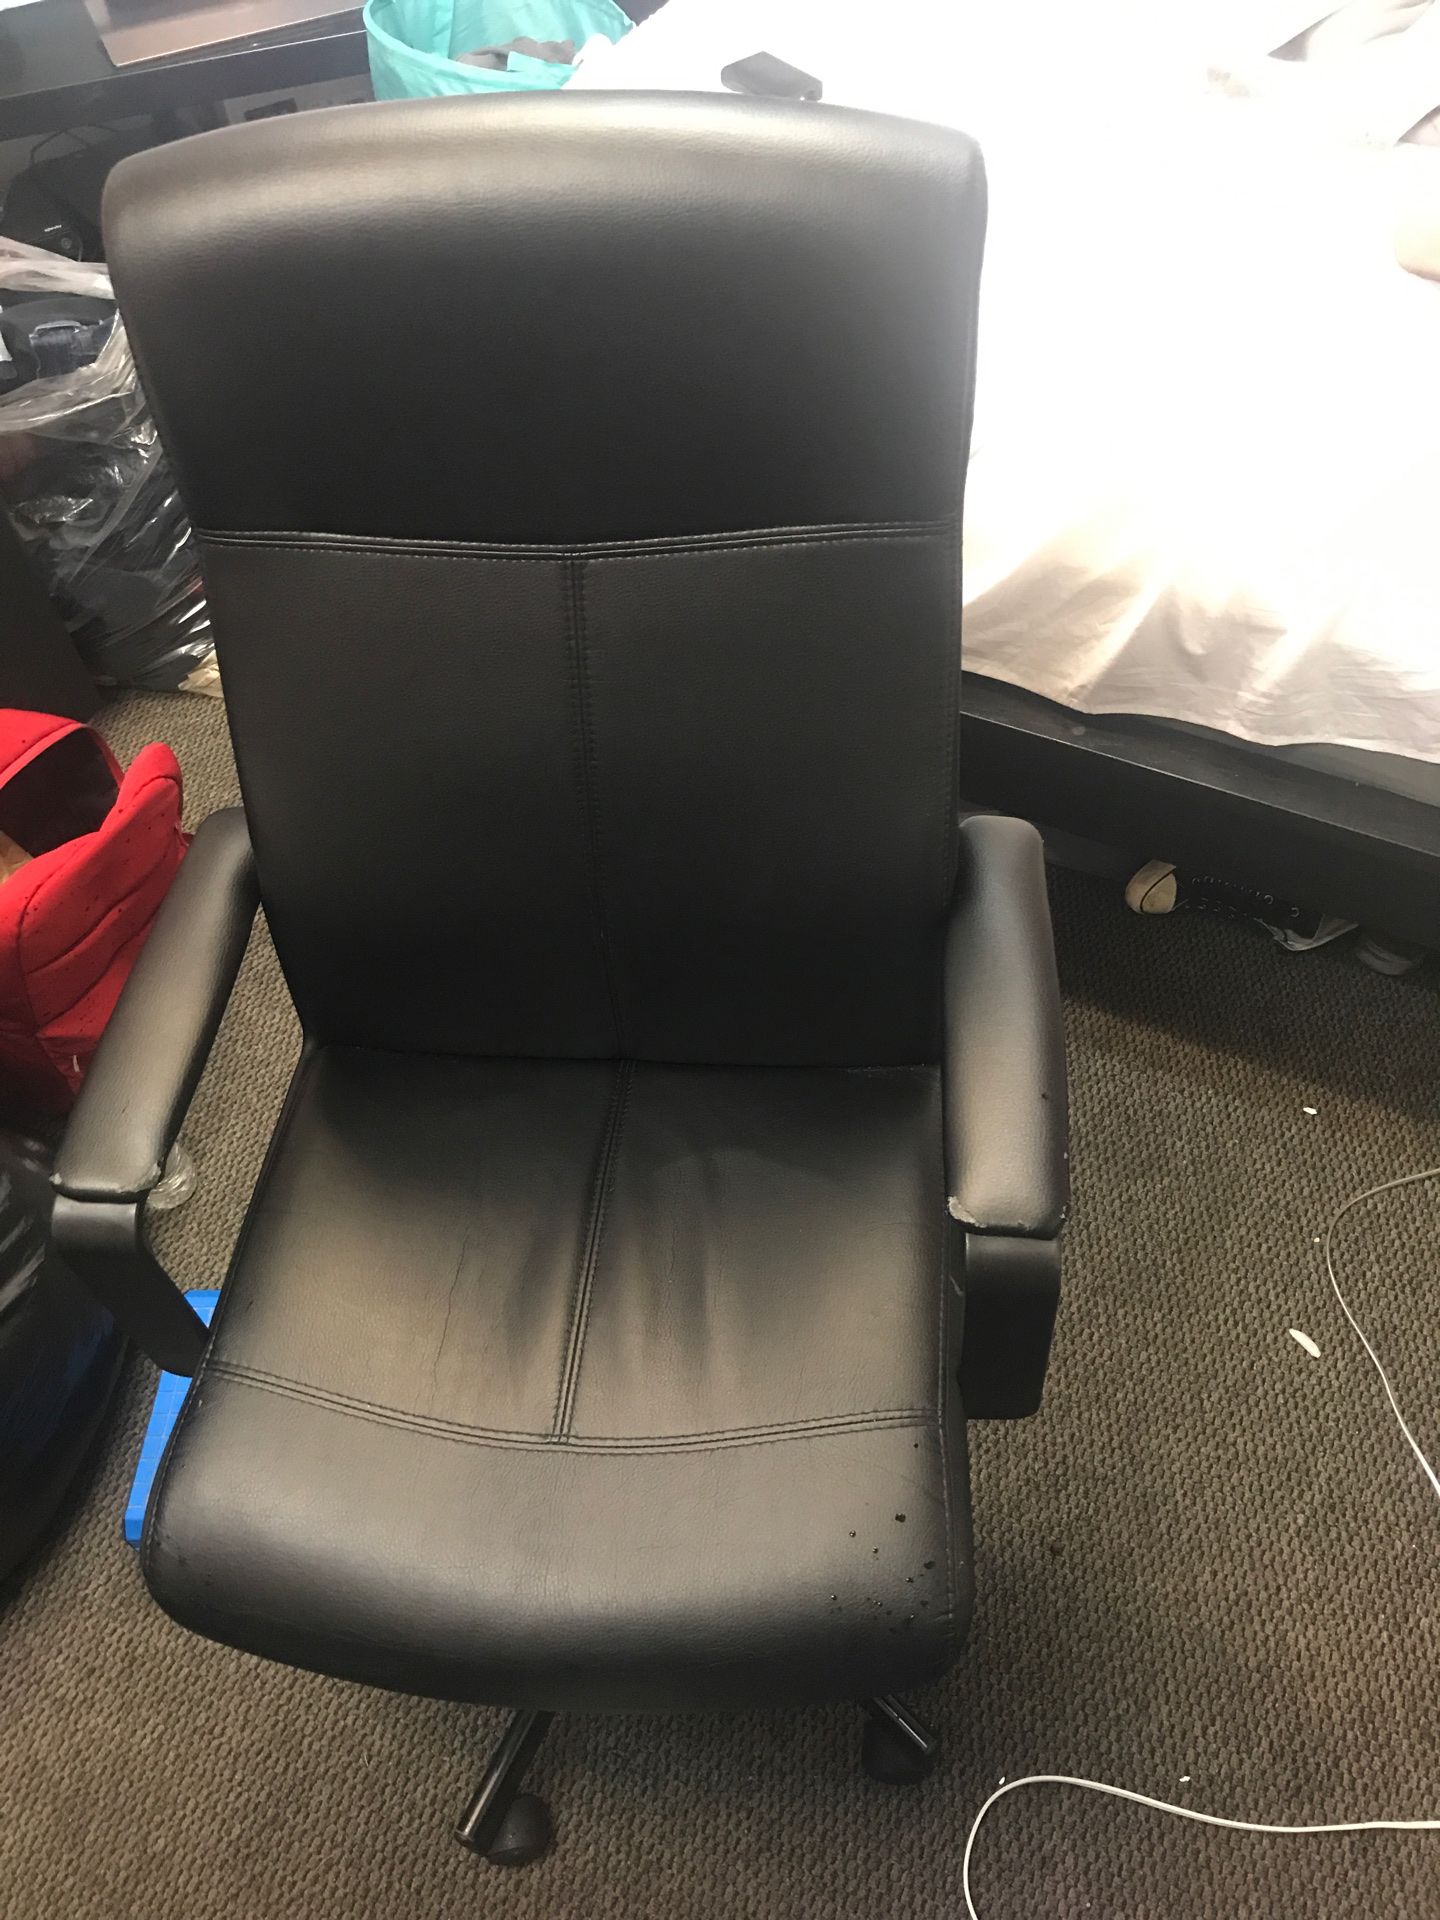 Black office or gamer chair